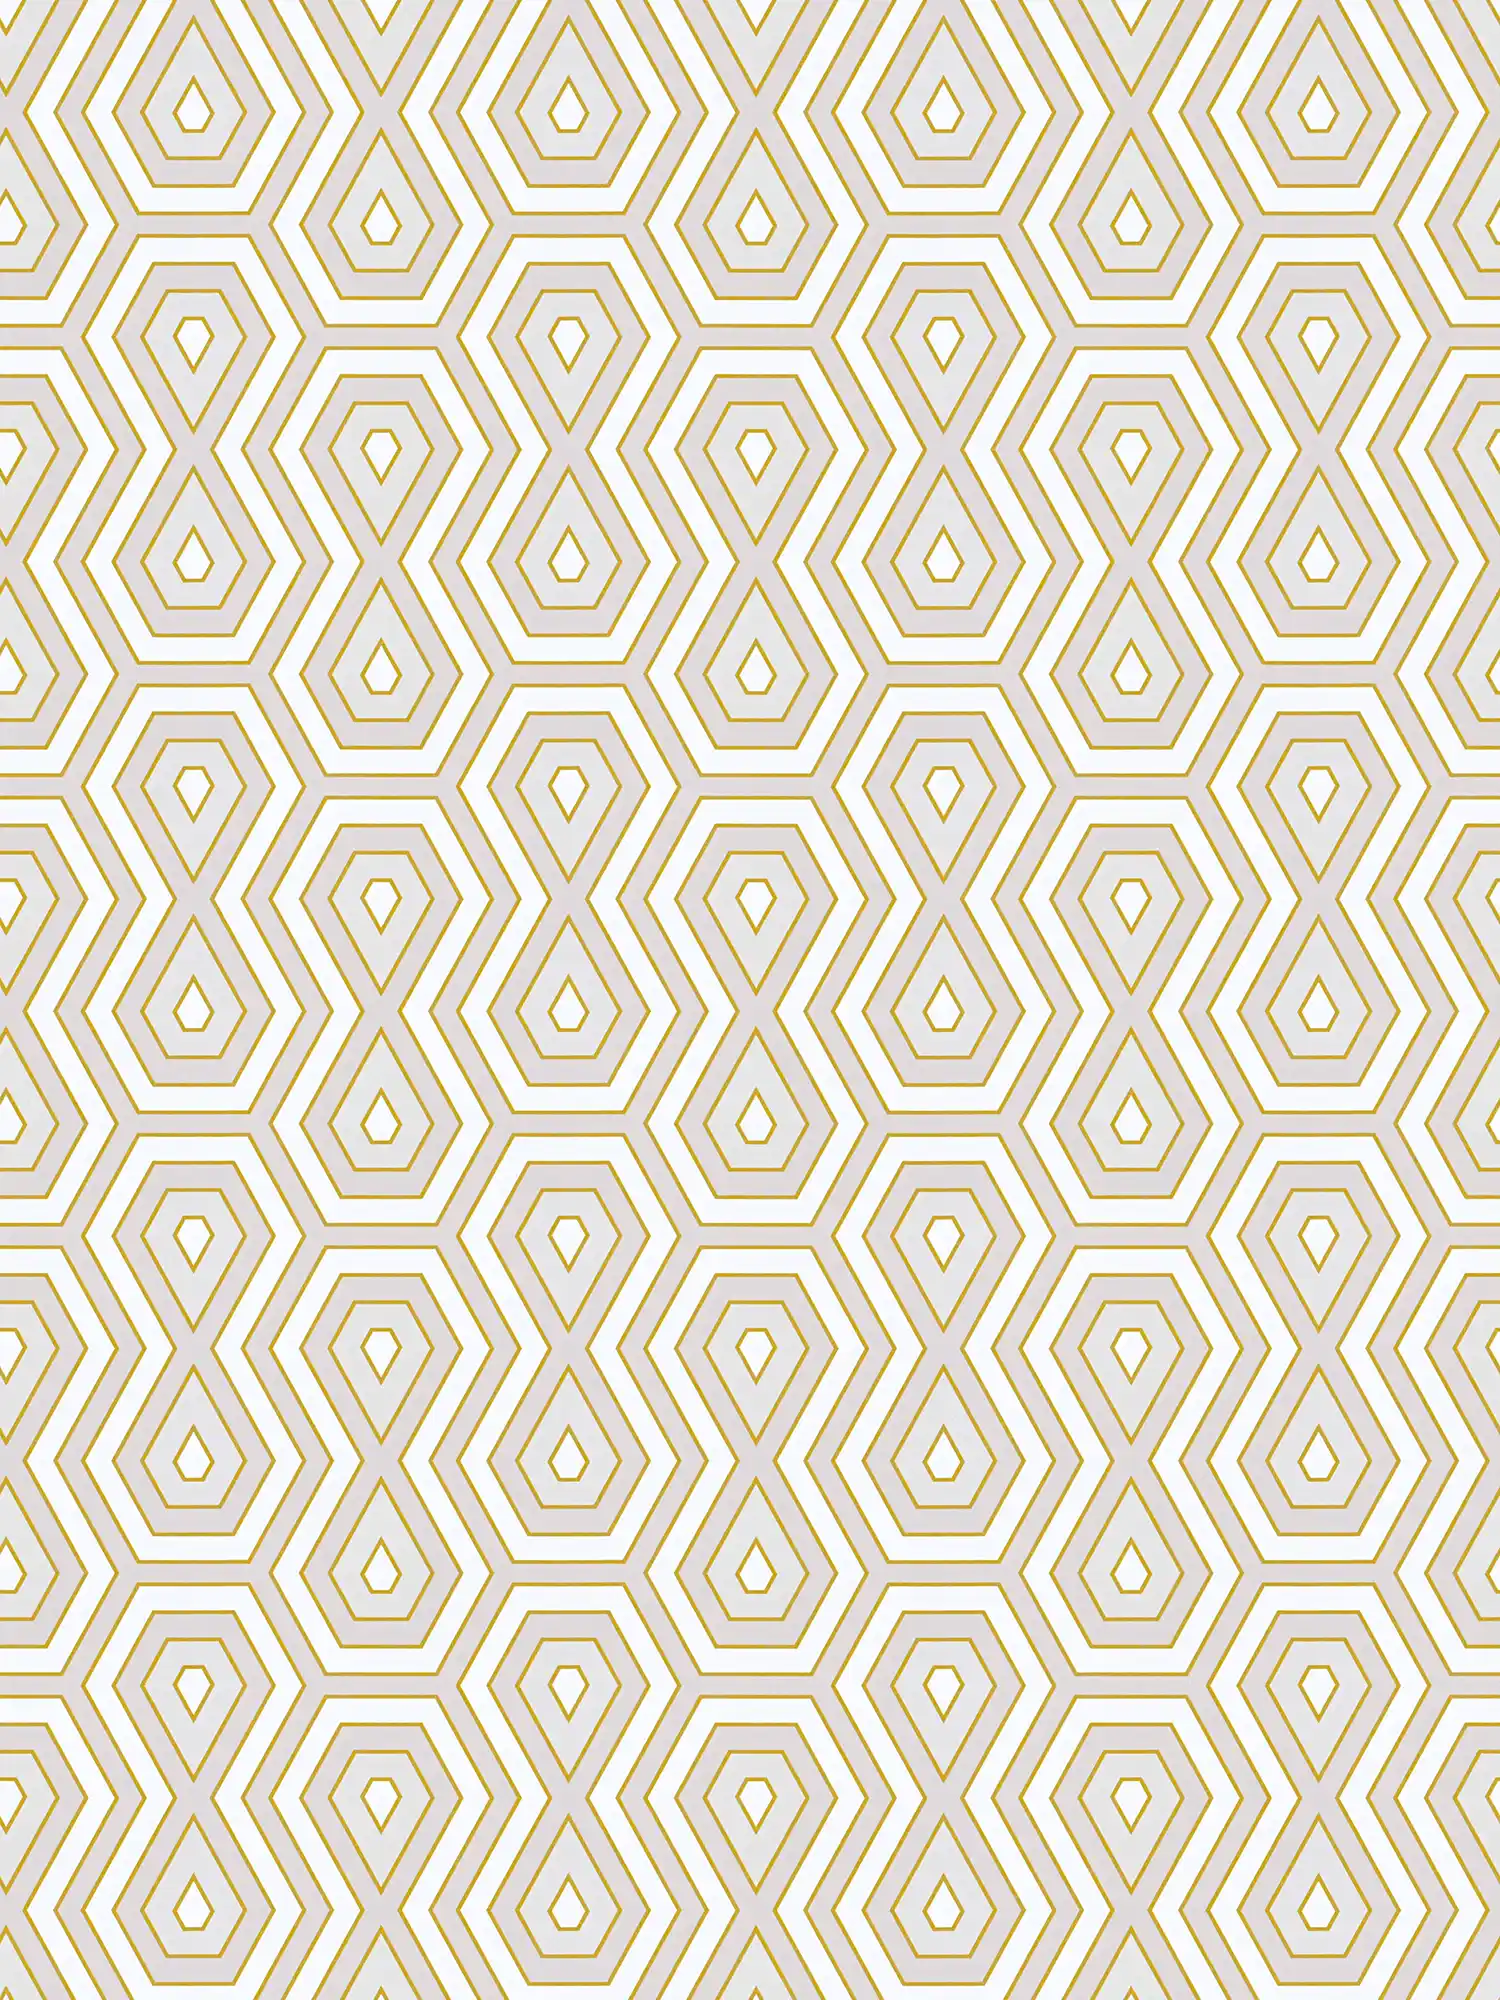 Tapete Grau & Gold mit Grafik Design im Retro Stil – Gold, Weiß, Grau
